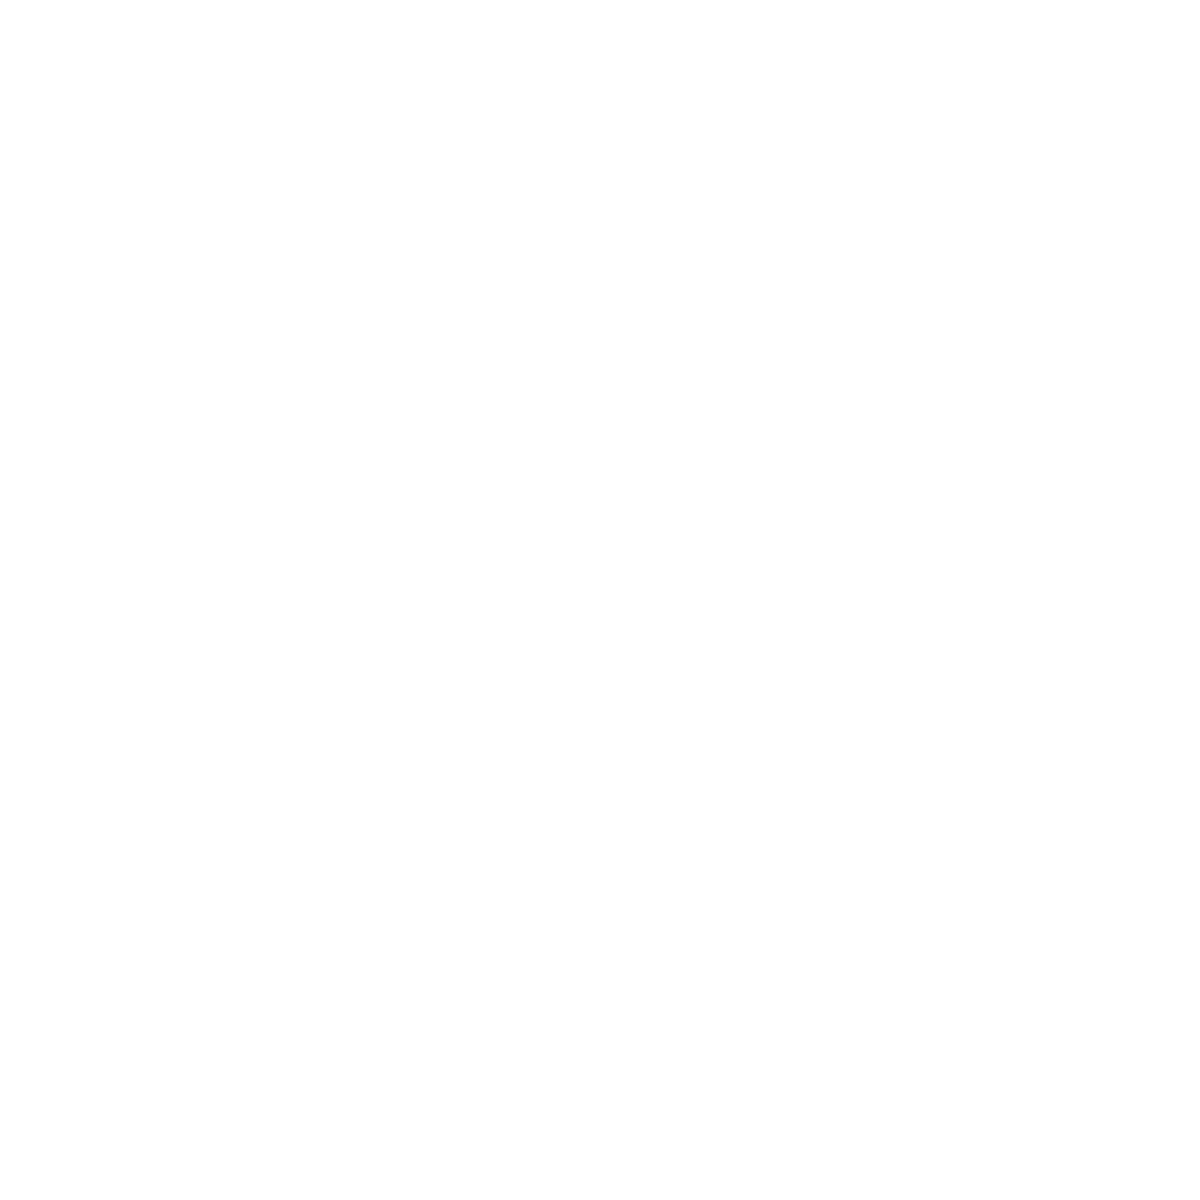 Crown casino logo